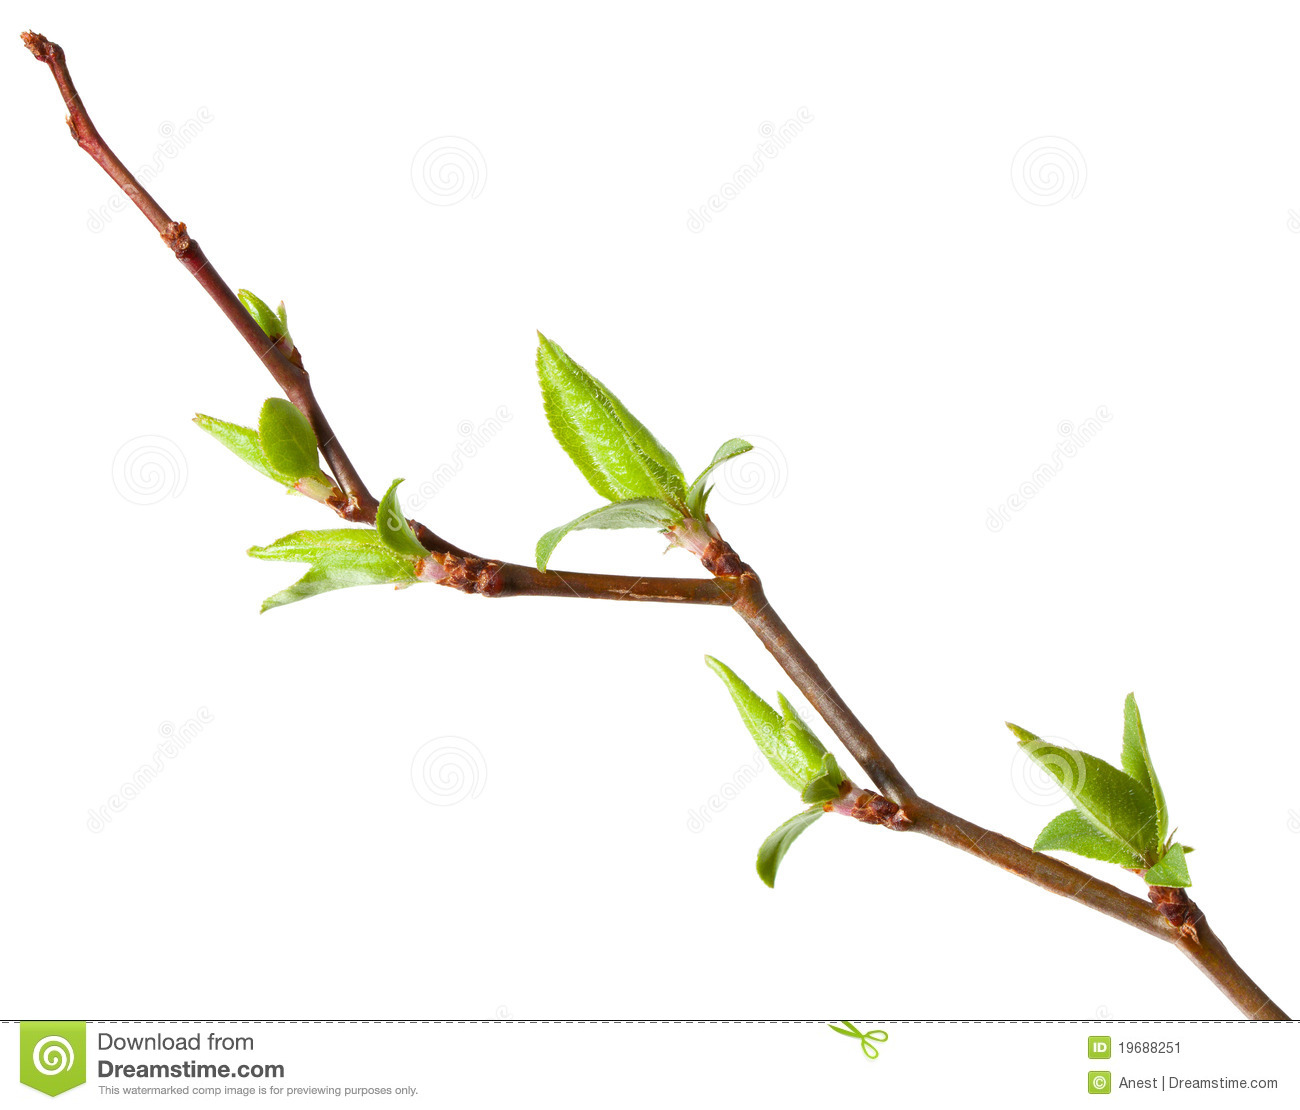 Cherry Tree Spring Budding Stock Image   Image  19688251